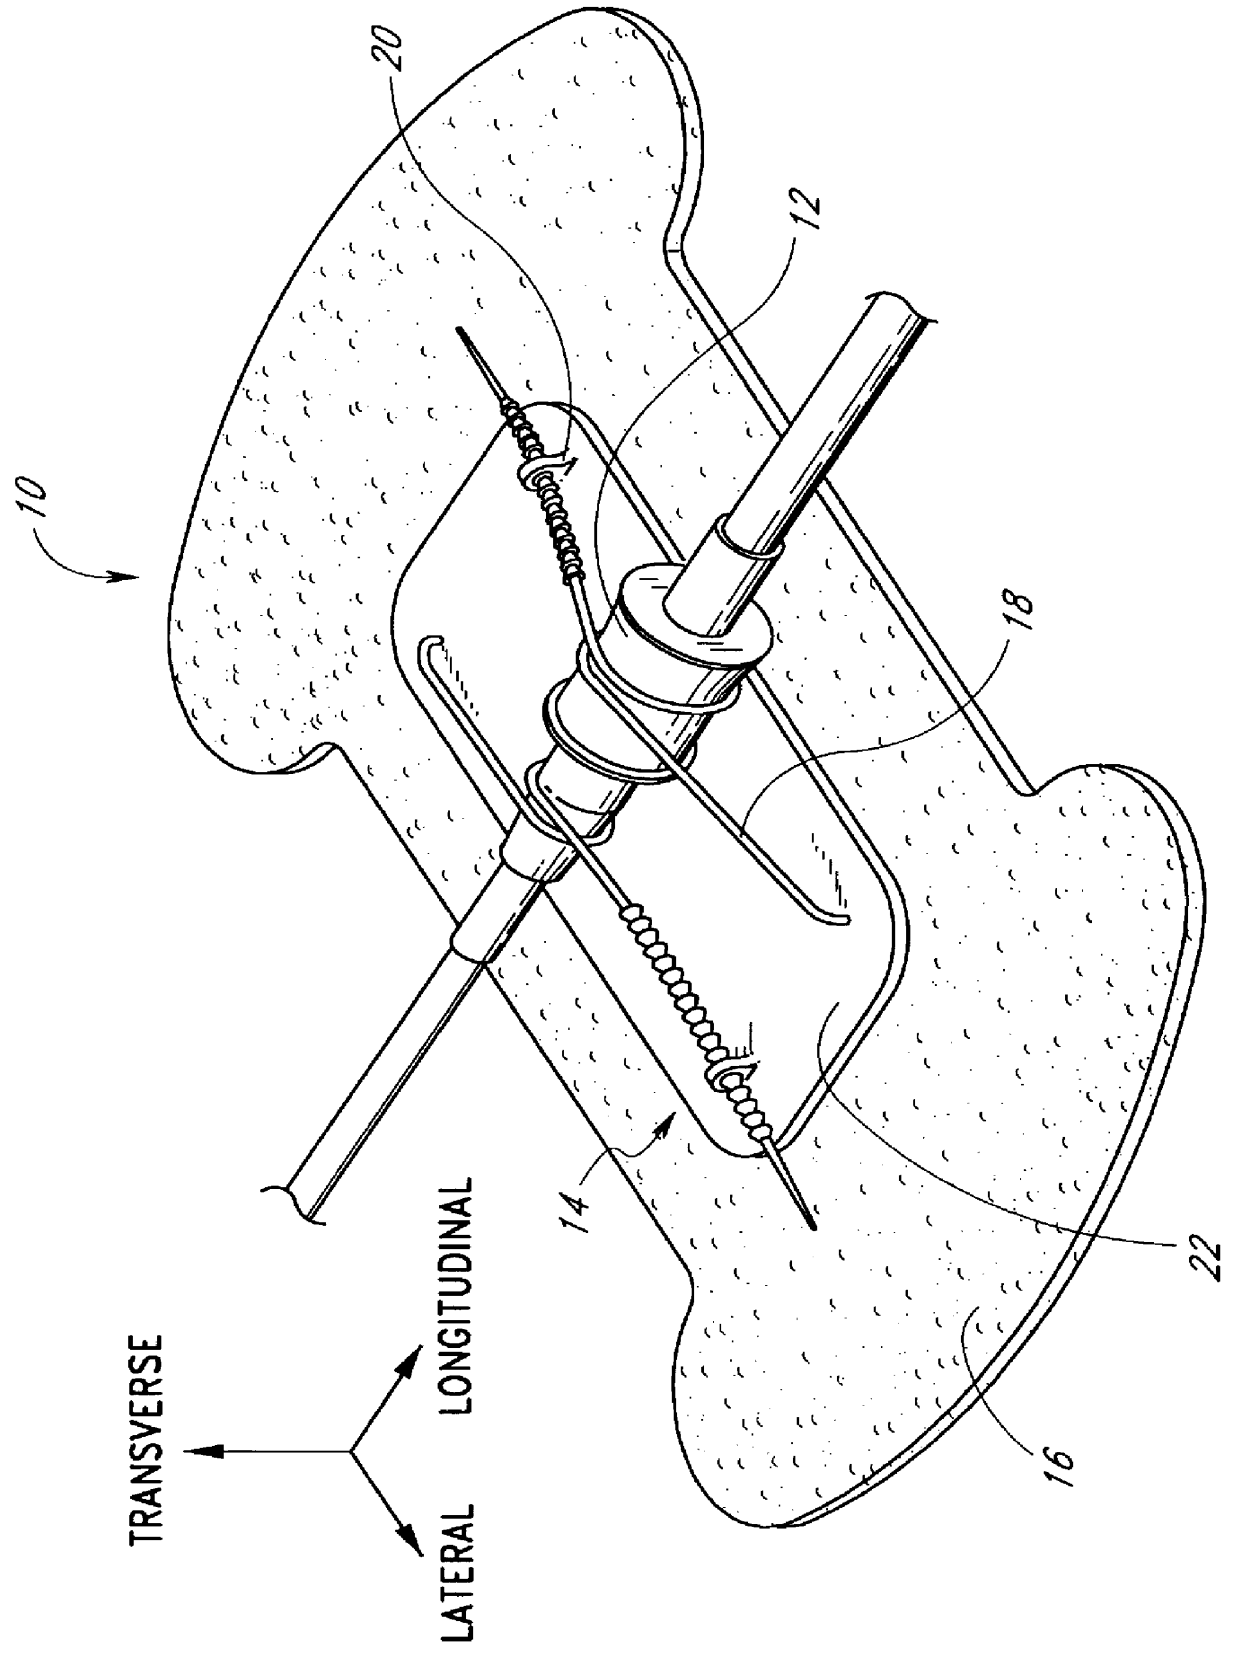 Catheter securement device